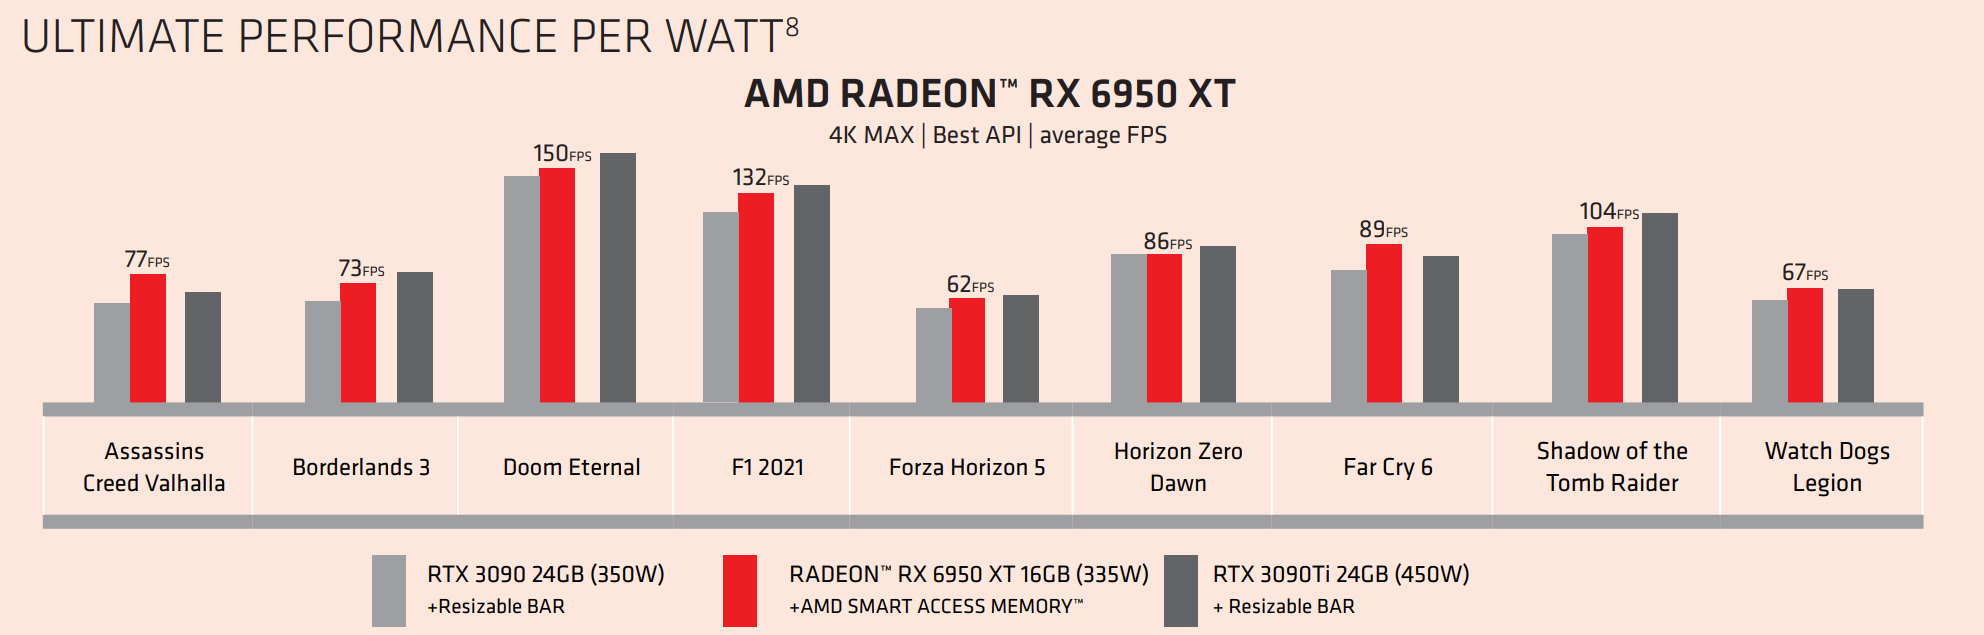 AMD Radeon RX 6950 XT vs RTX 3090